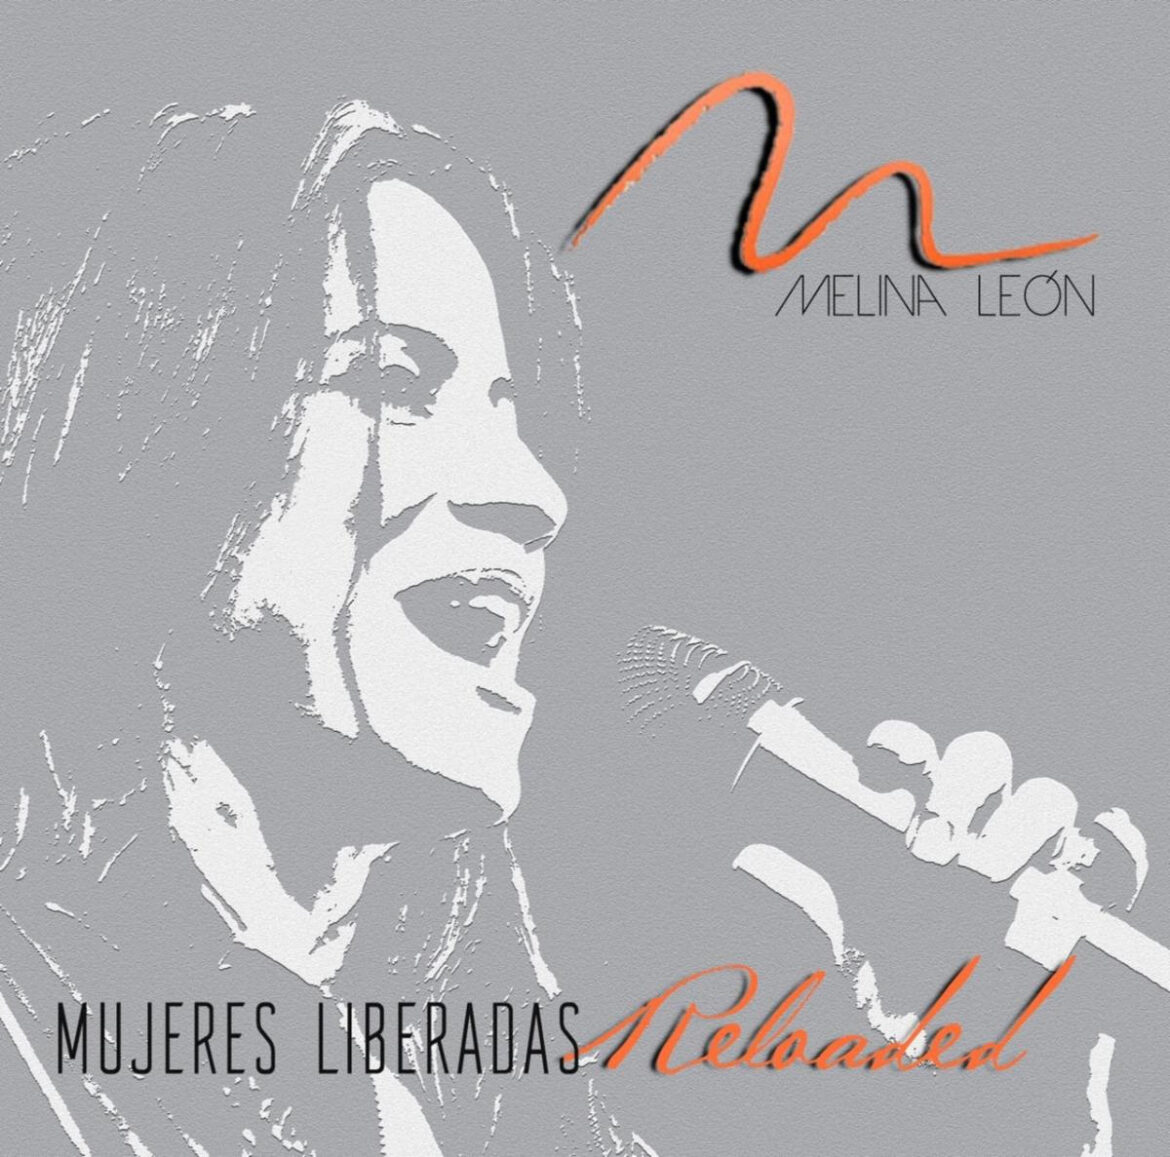 Melina León lanza ﻿”Mujeres Liberadas Reloaded”